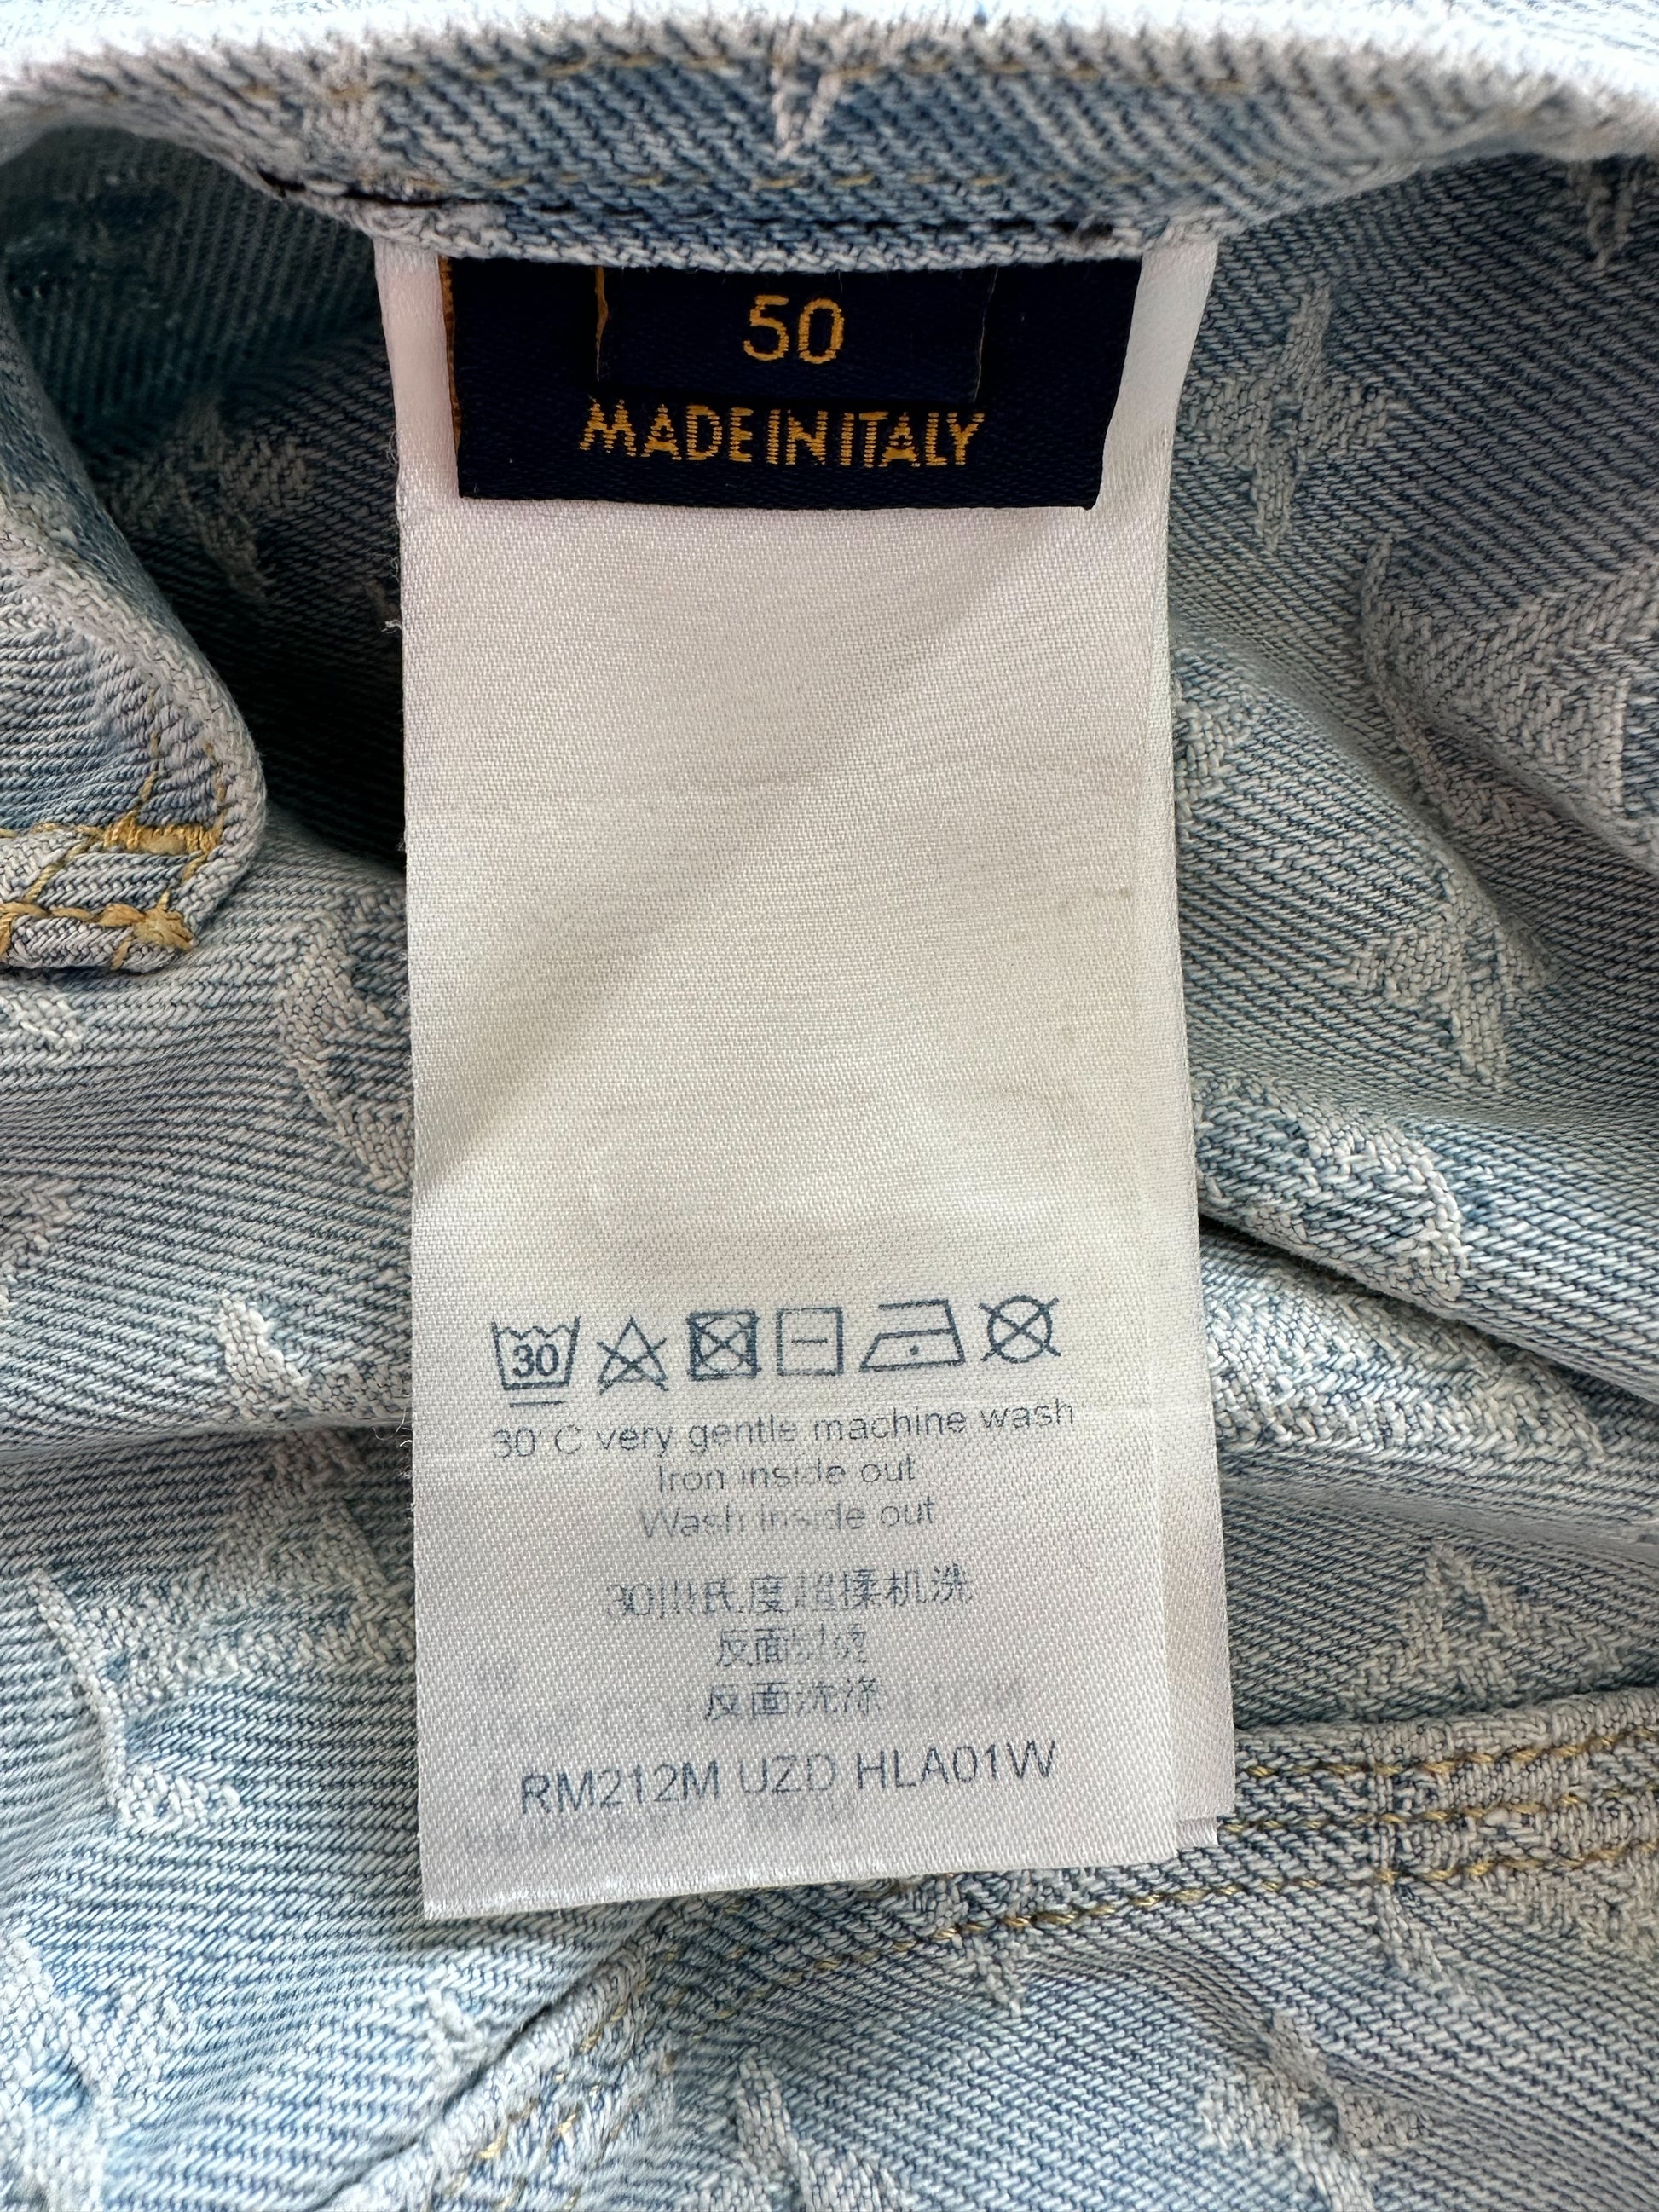 Louis Vuitton Nigo Giant Waves Monogram Denim Jacket – Savonches